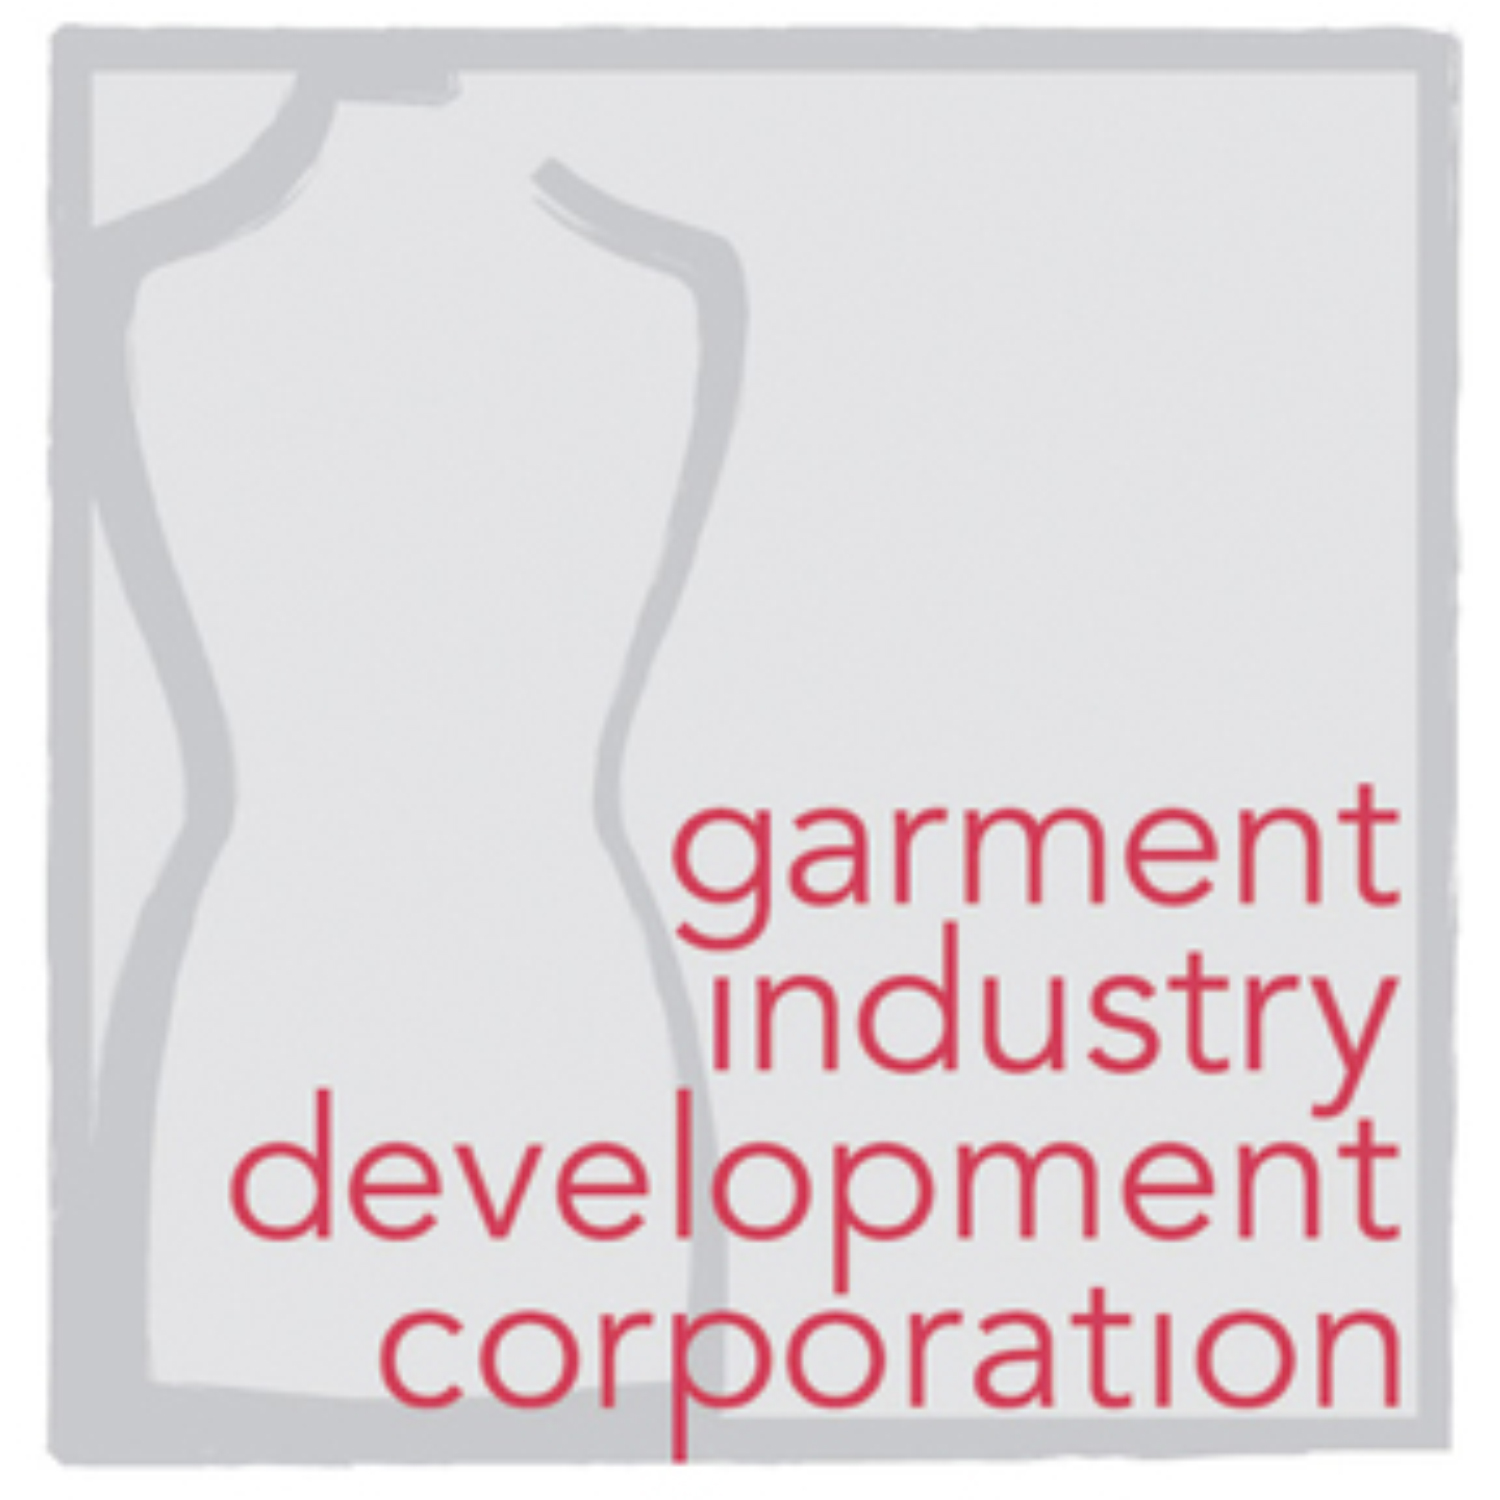 kelsy-zimba-collections-zform-garment-industry.jpg